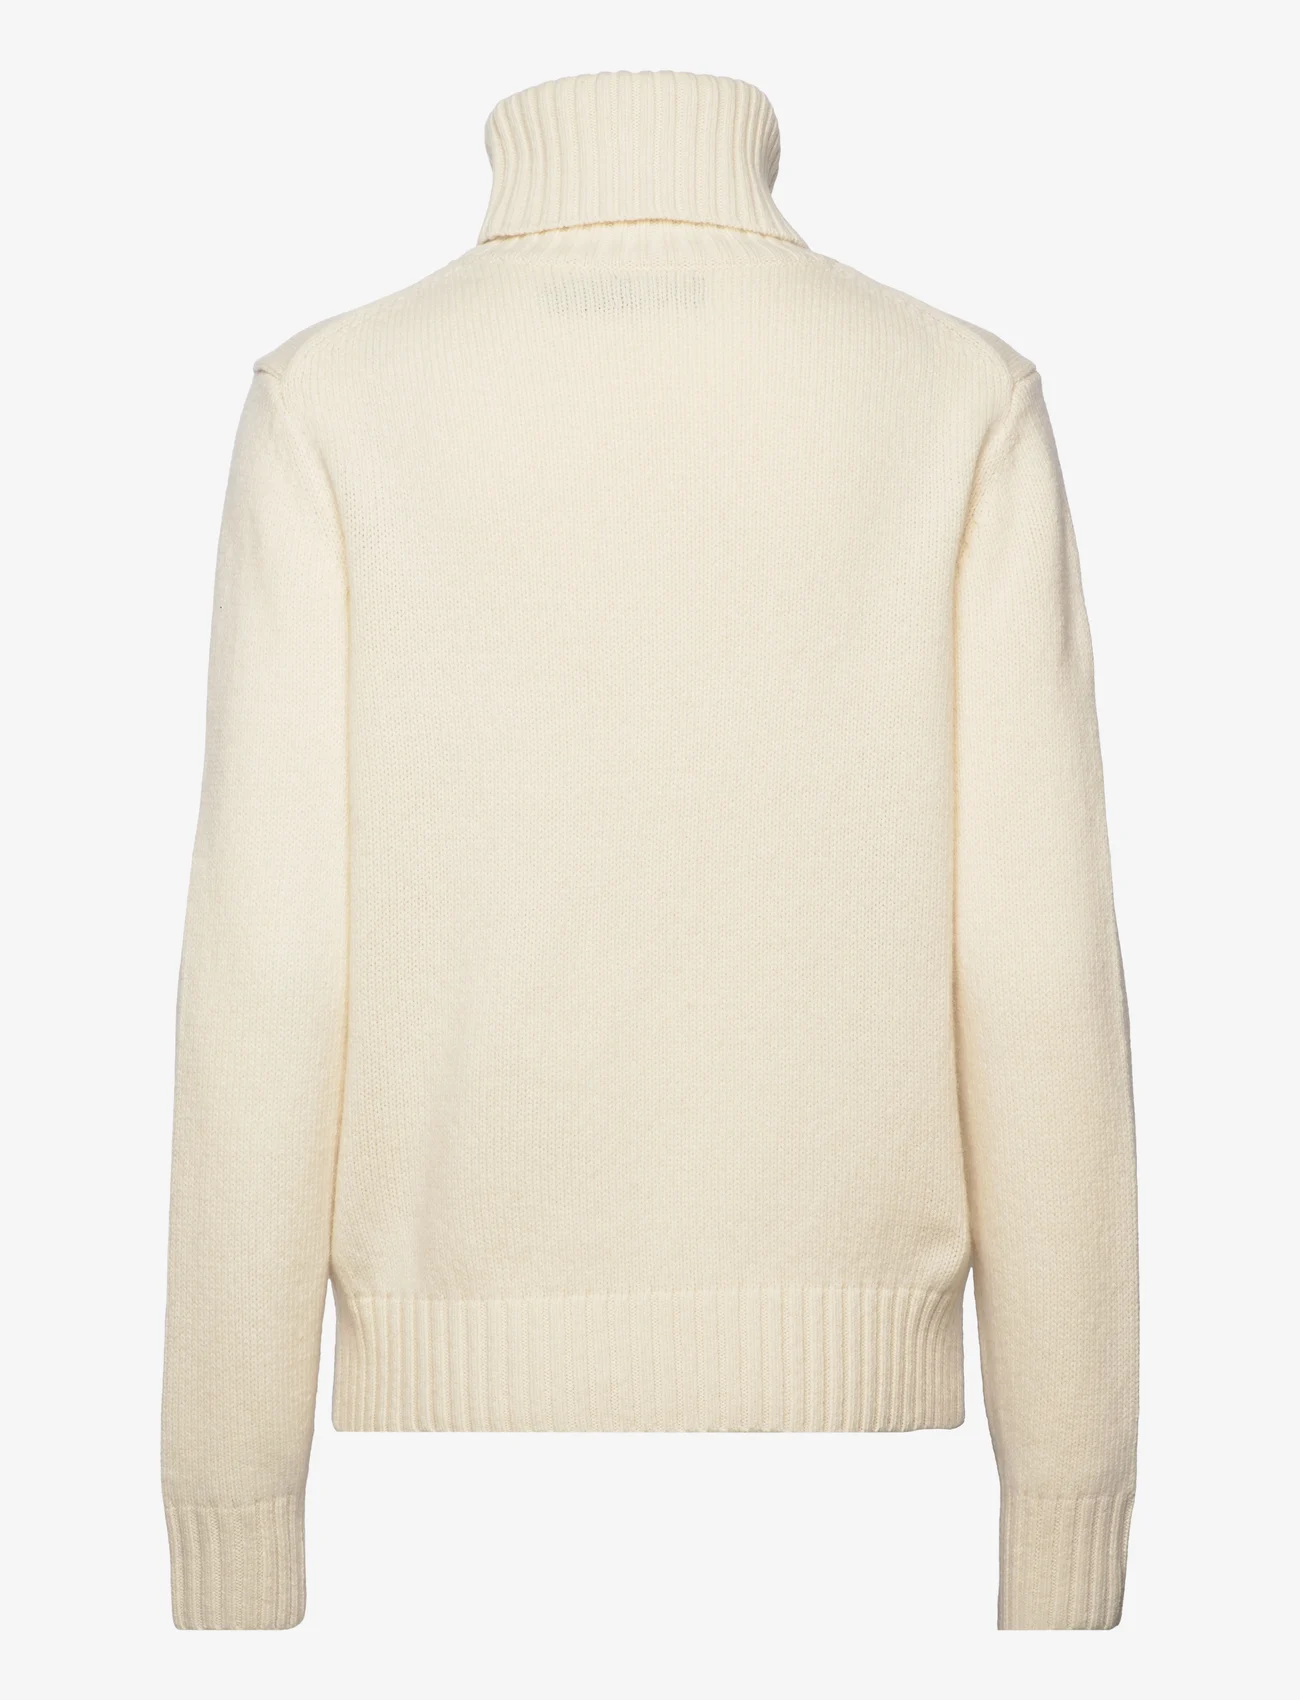 Polo Ralph Lauren - Intarsia-Crest Wool Turtleneck - pulls à col roulé - cream multi - 1